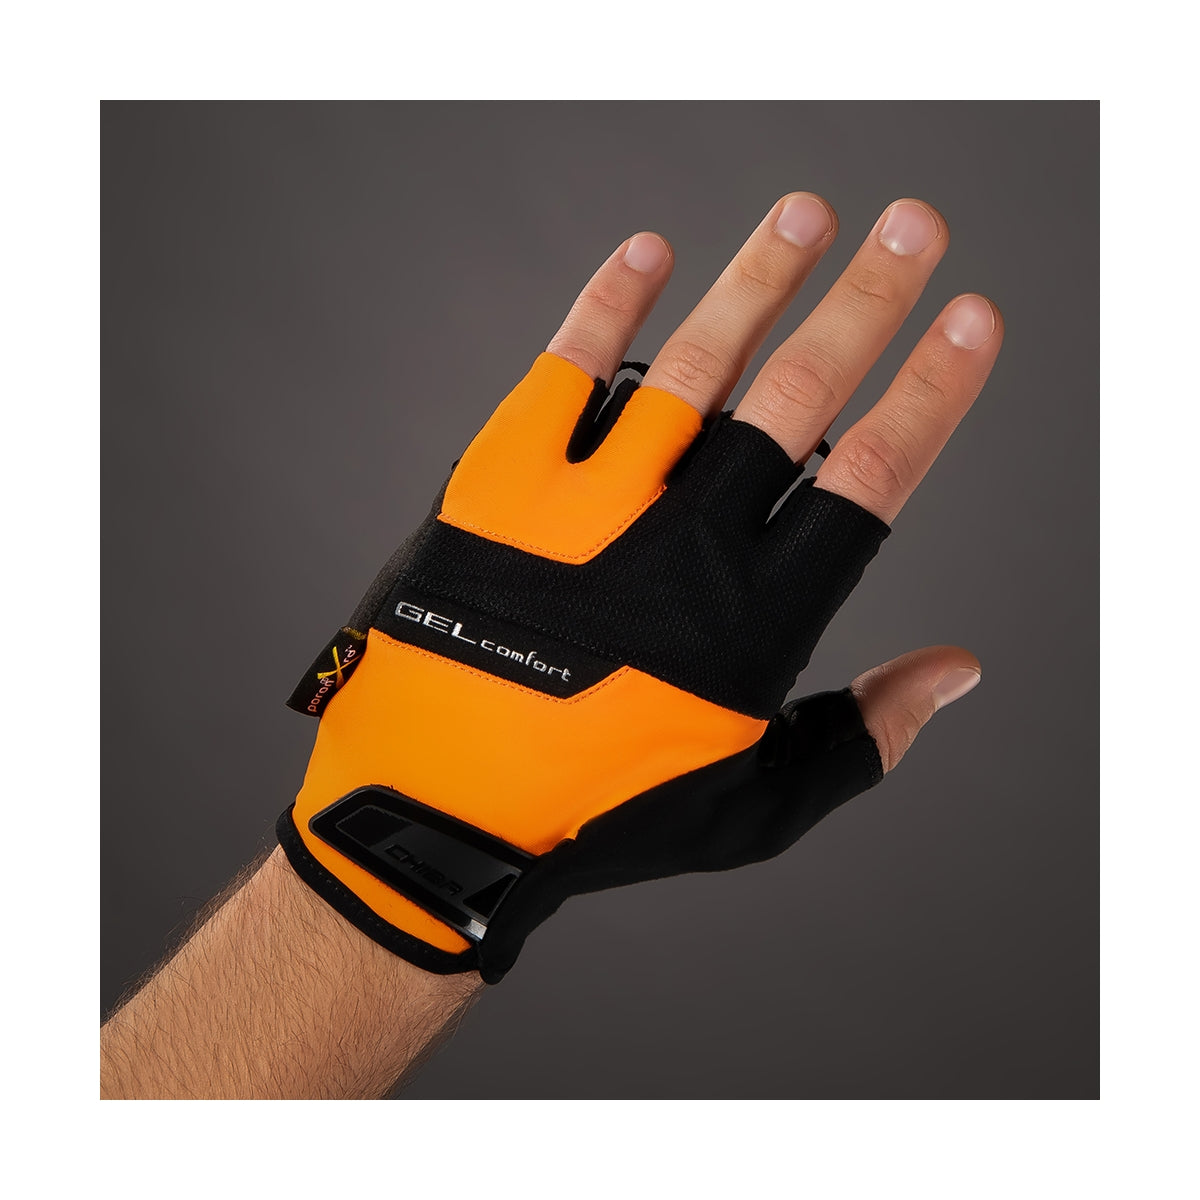 Chiba Gel Comfort Mens Cycling Gloves (Orange)